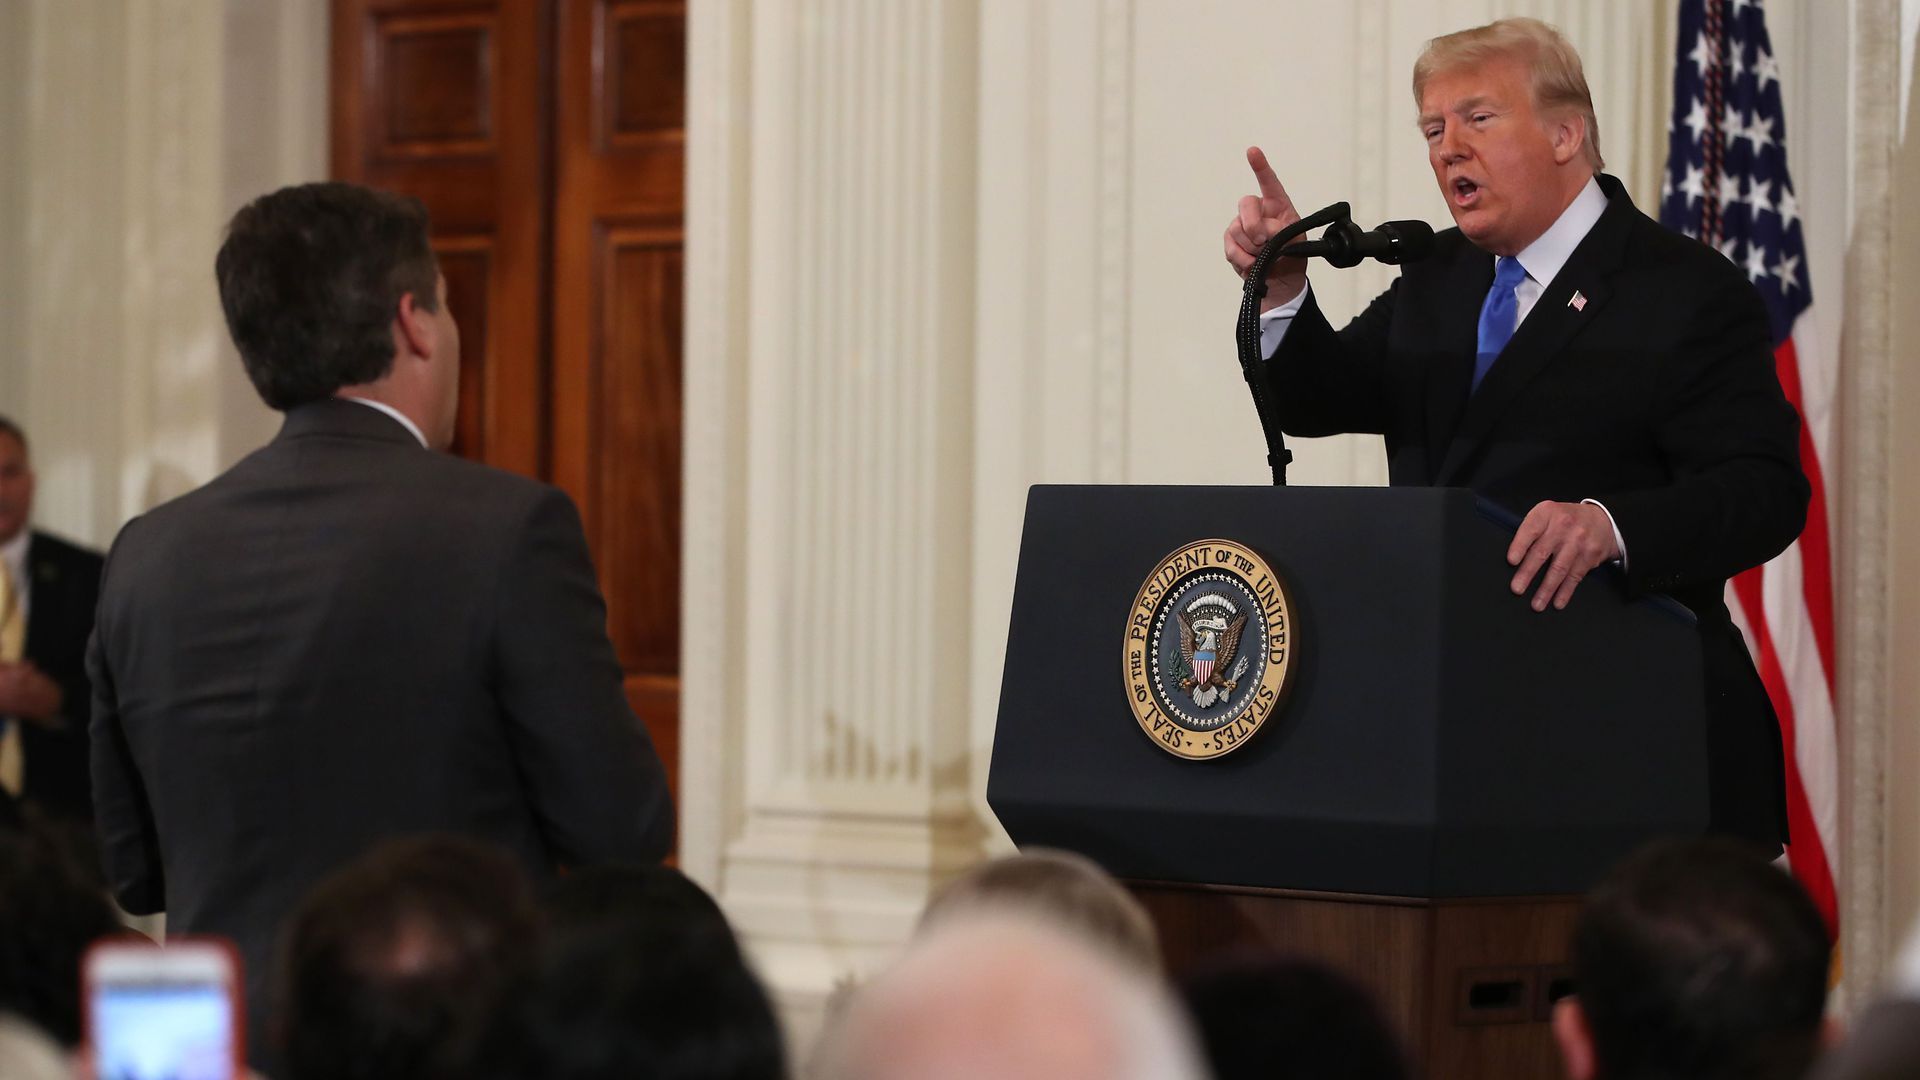 President Trump criticizes CNN reporter Jim Acosta on Wednesday